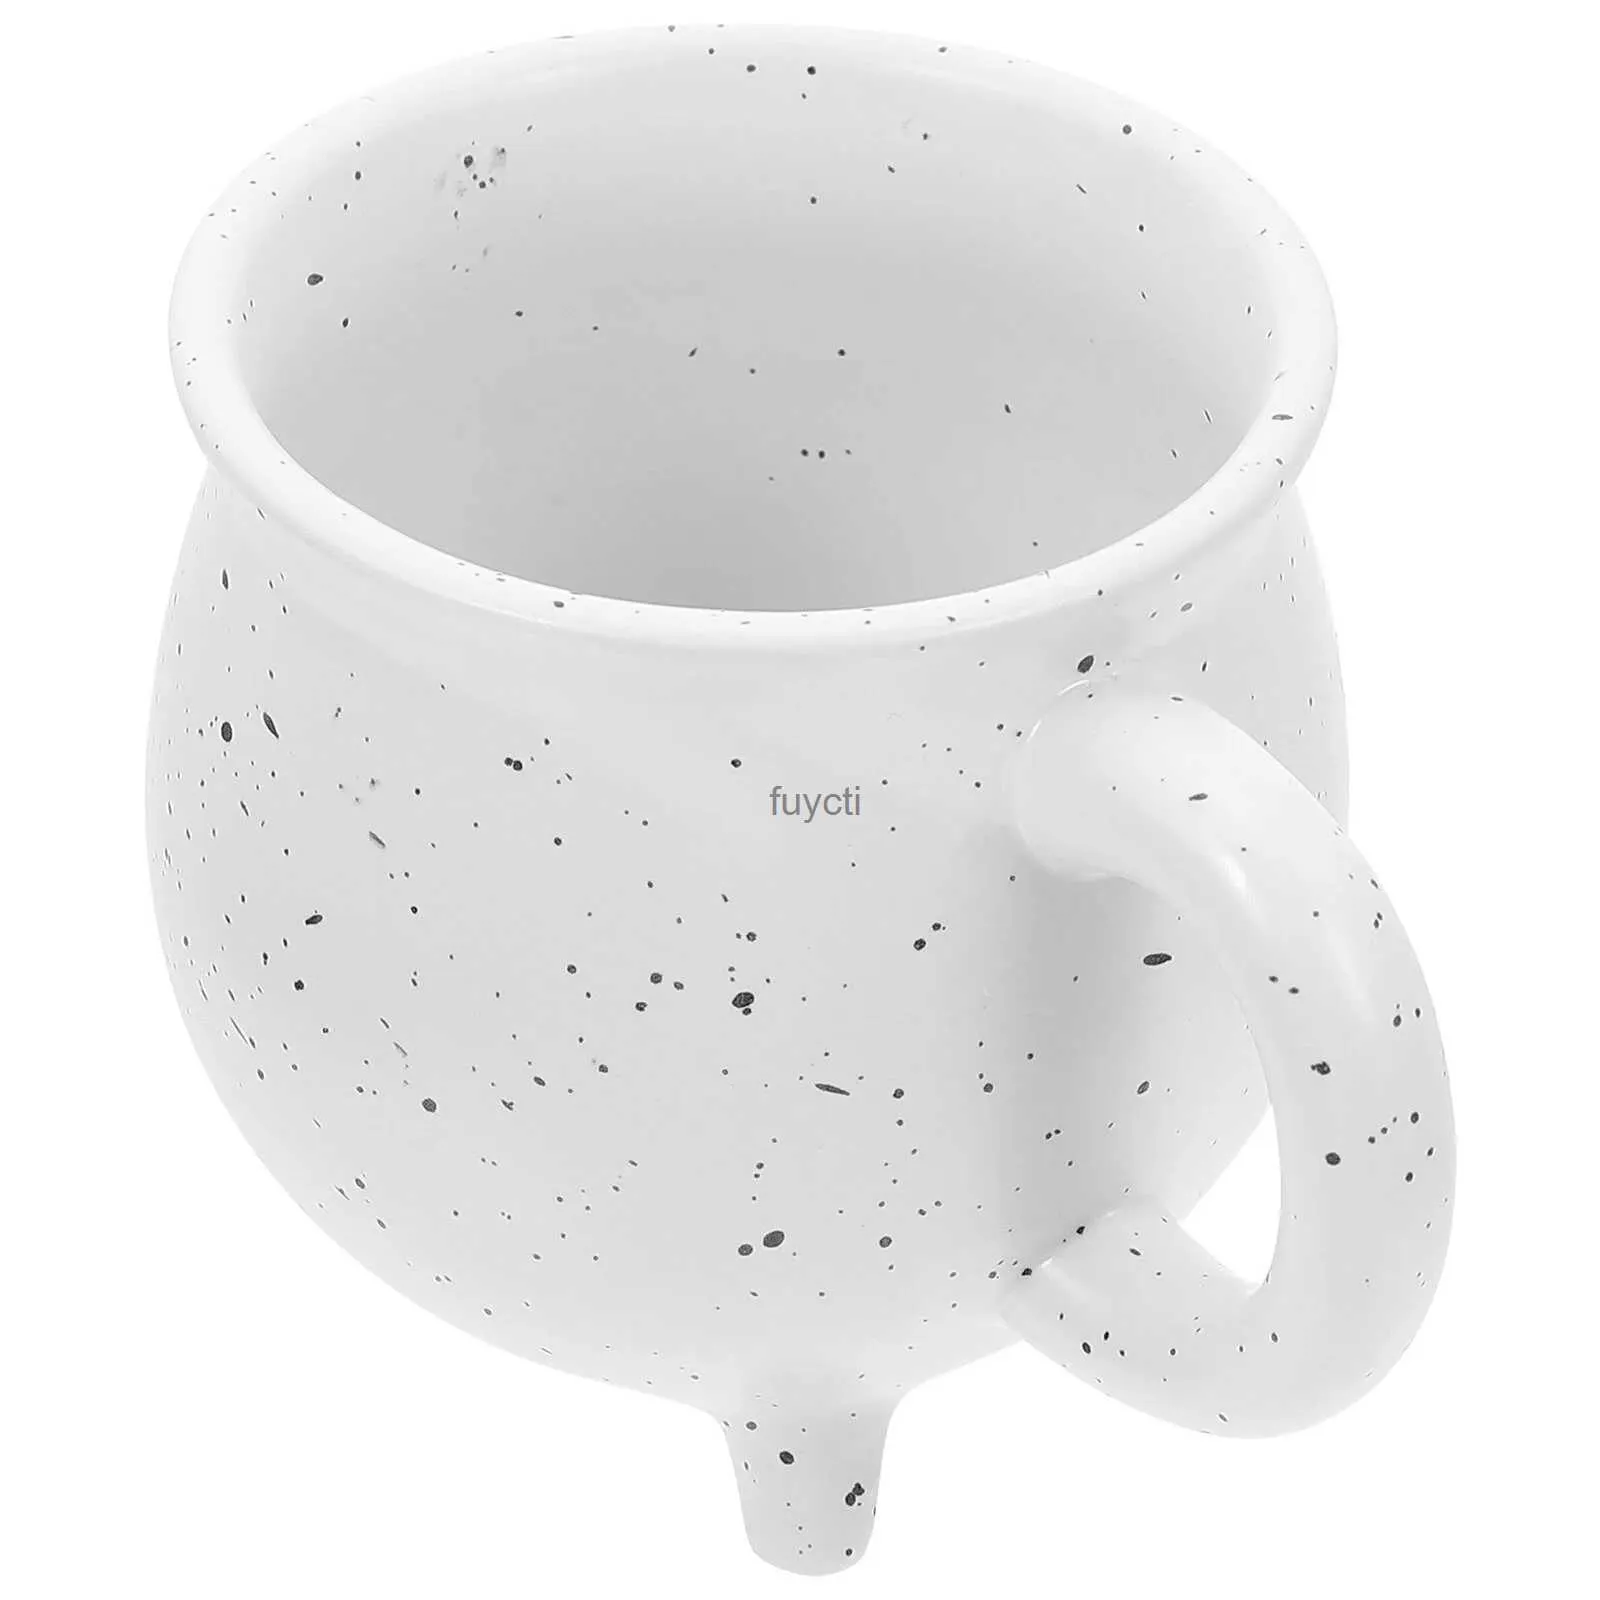 Mugs Witches Brew Cauldron Mug Ceramic Cauldron Coffee Mug Decorative Water Drinking Cups Naughty Mug 450ML Tea Cup Party Favor YQ240109